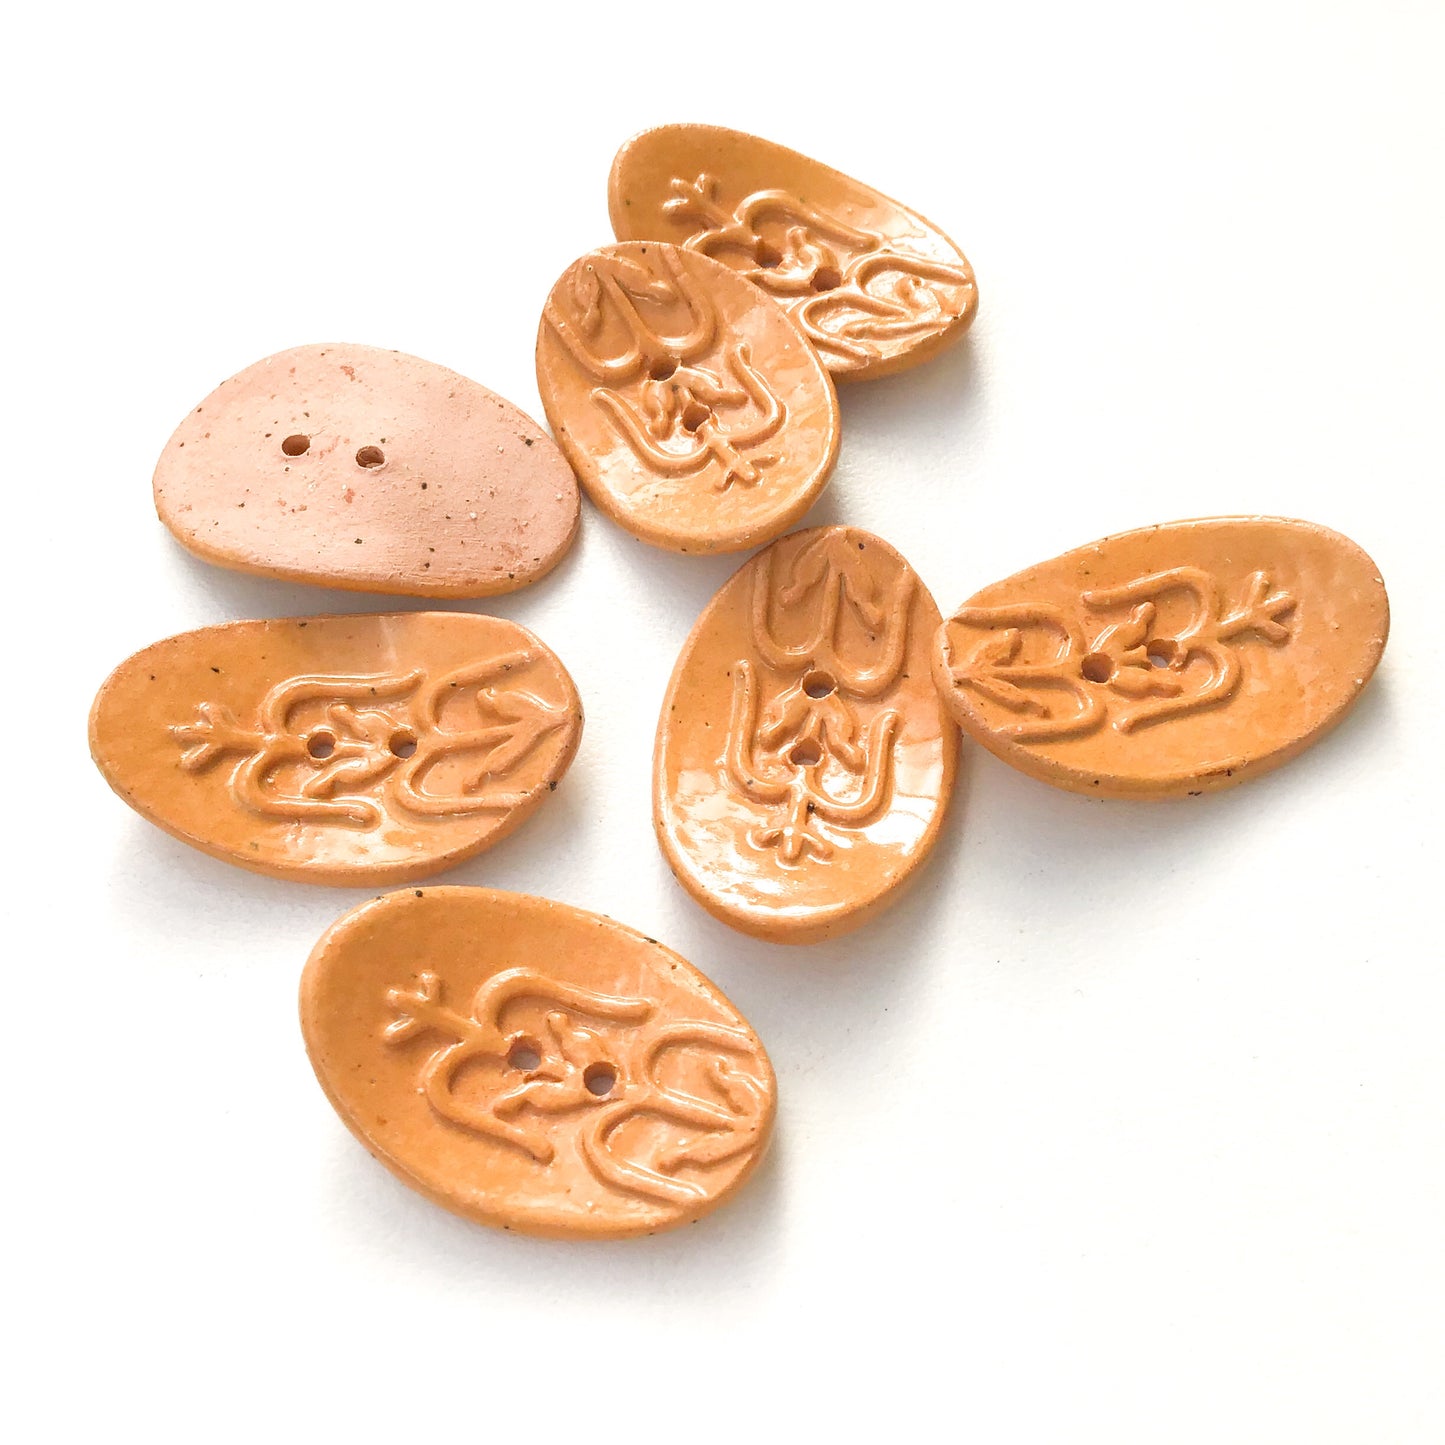 Southwestern Corn Buttons - Golden-Brown Ceramic Buttons - 3/4" x 1 1/8" - 7 Pack